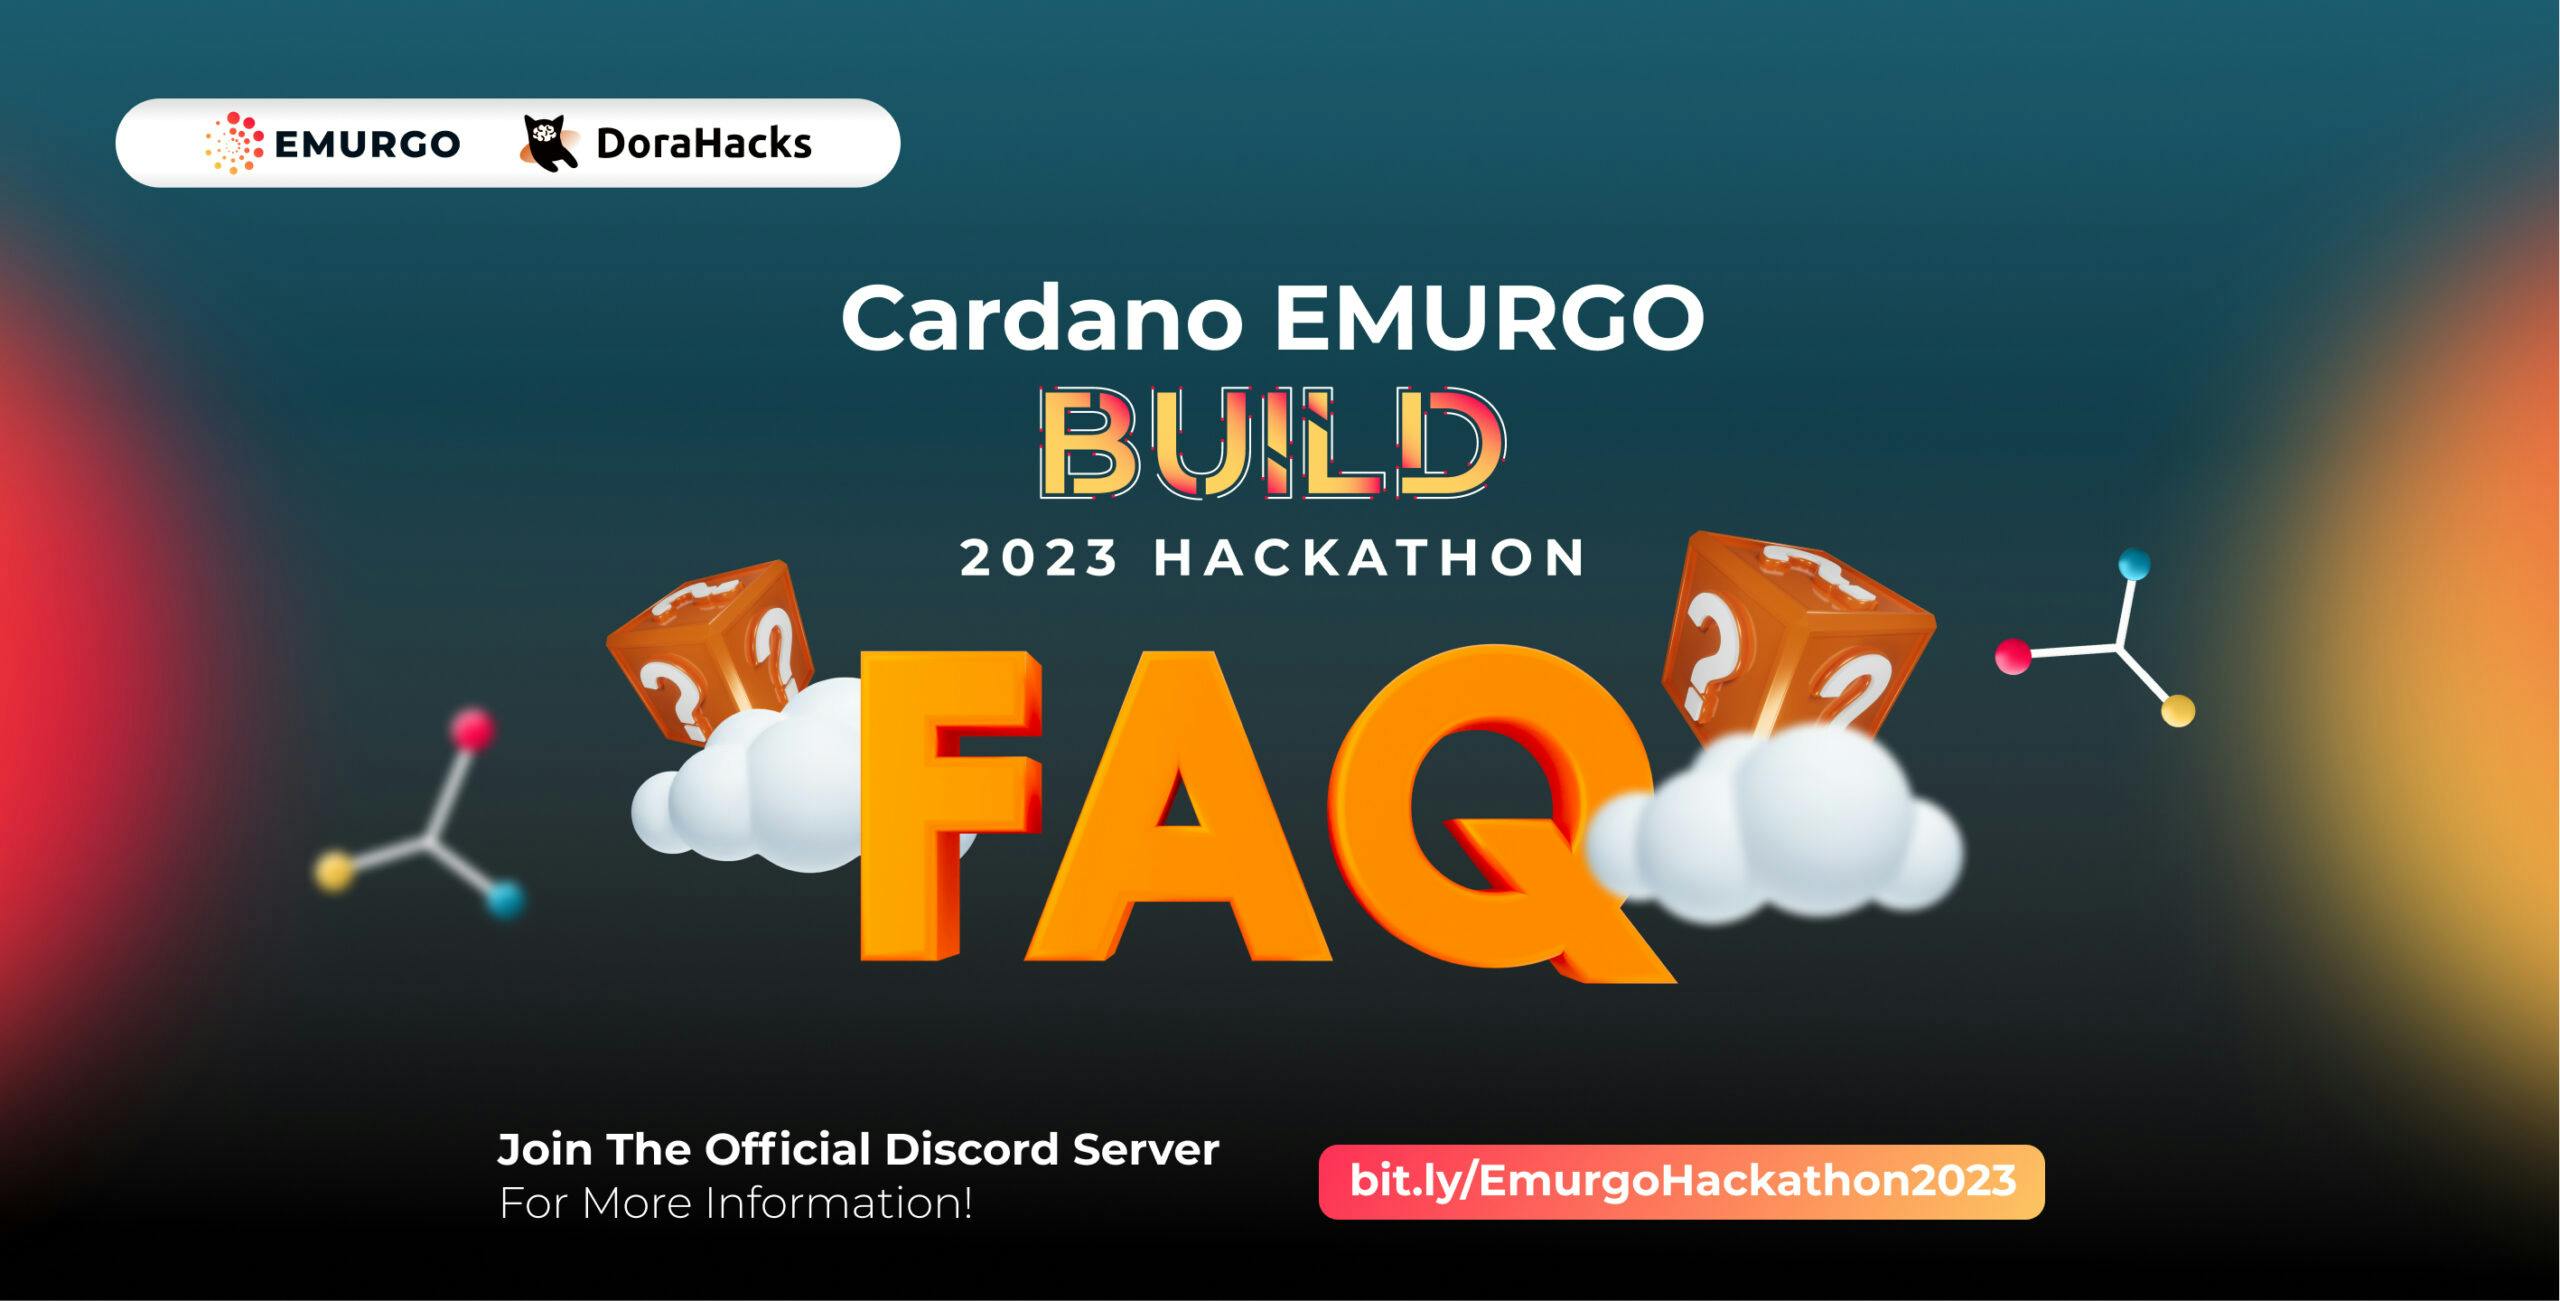 Cardano-EMURGO-BUILD-2023-FAQs-blog-1-scaled-1.jpg